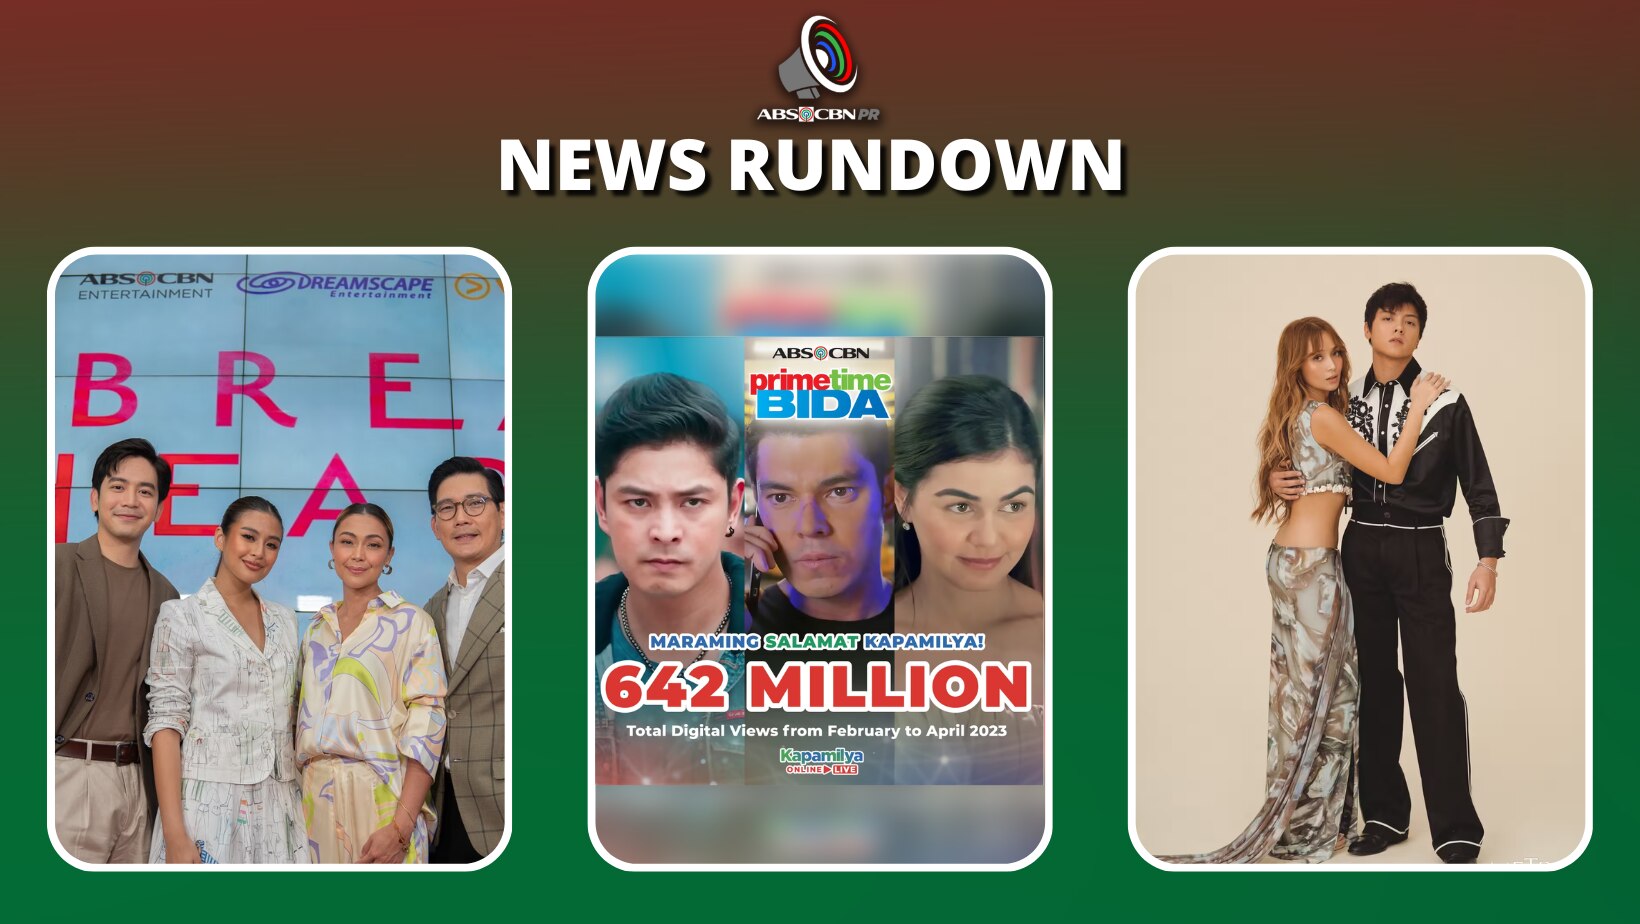 ABS-CBN primetime shows garner over 642 million online views